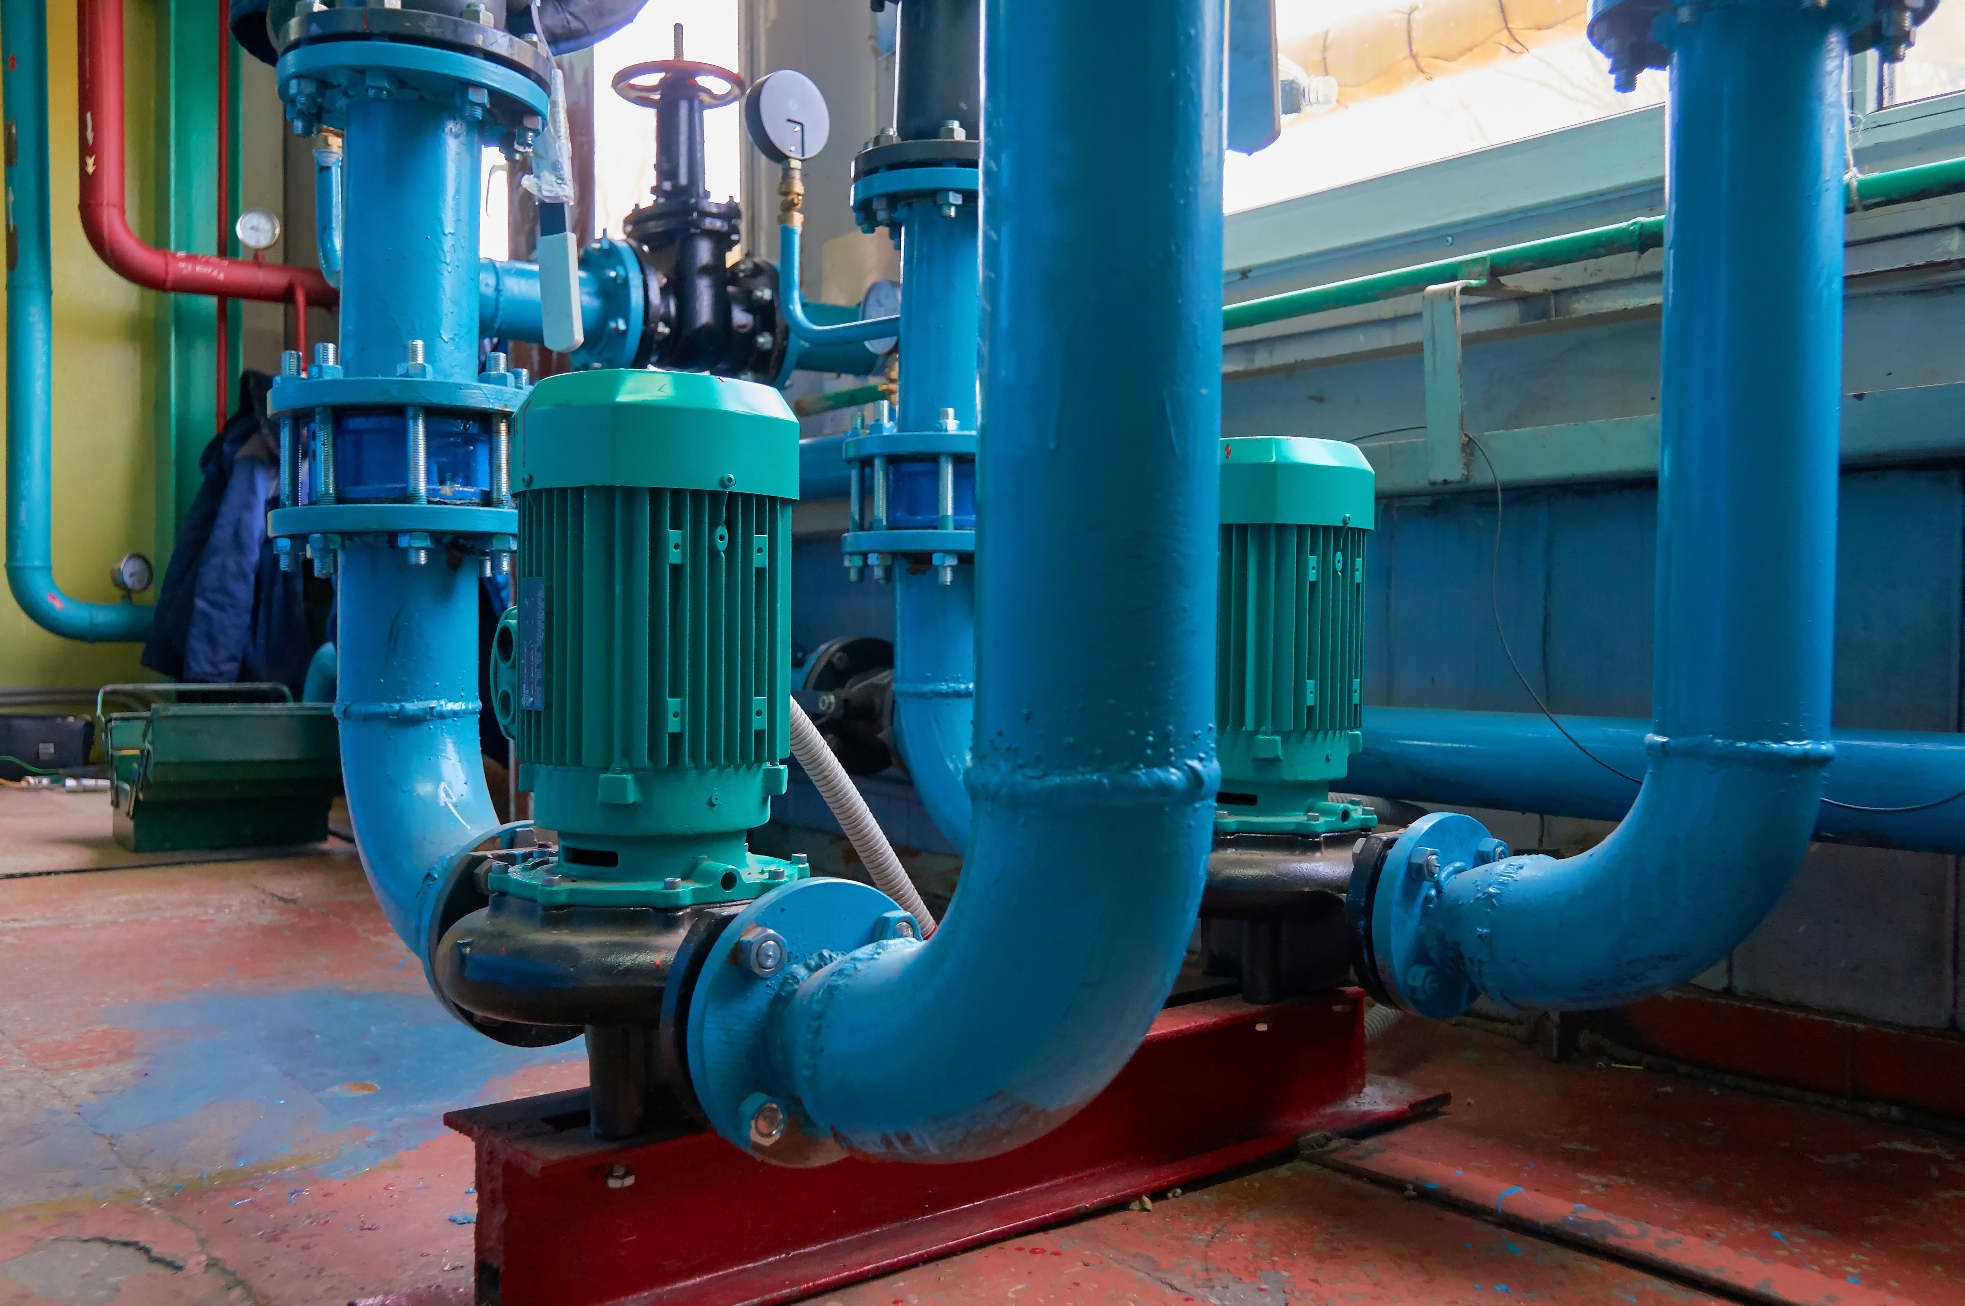 Vertical slot motors on pumps water conduit colored in blue.